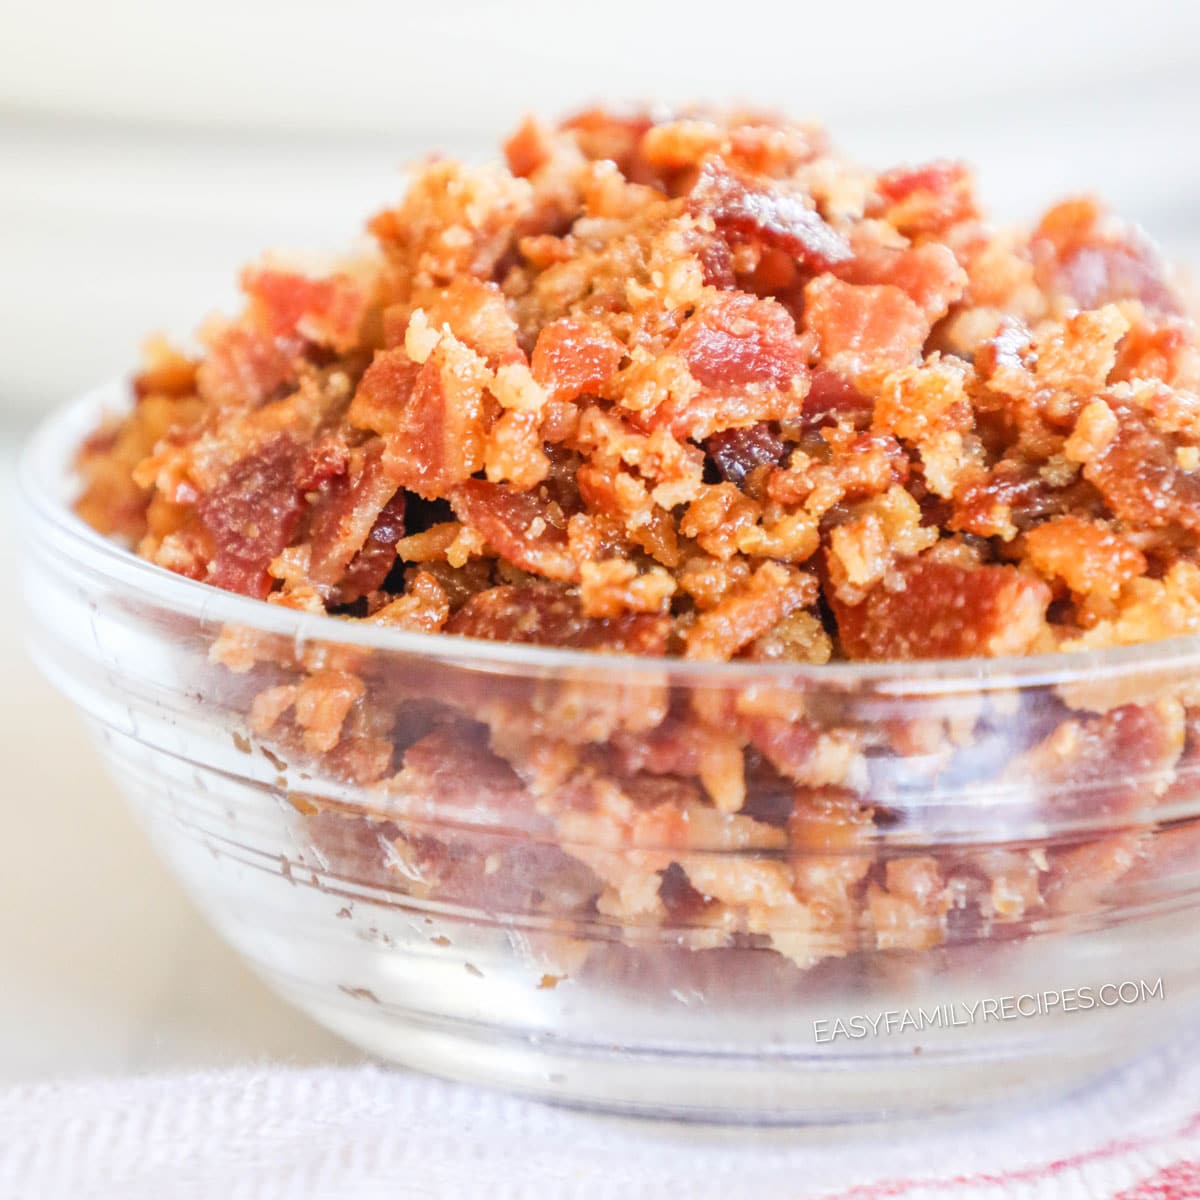 Homemade Bacon Bits